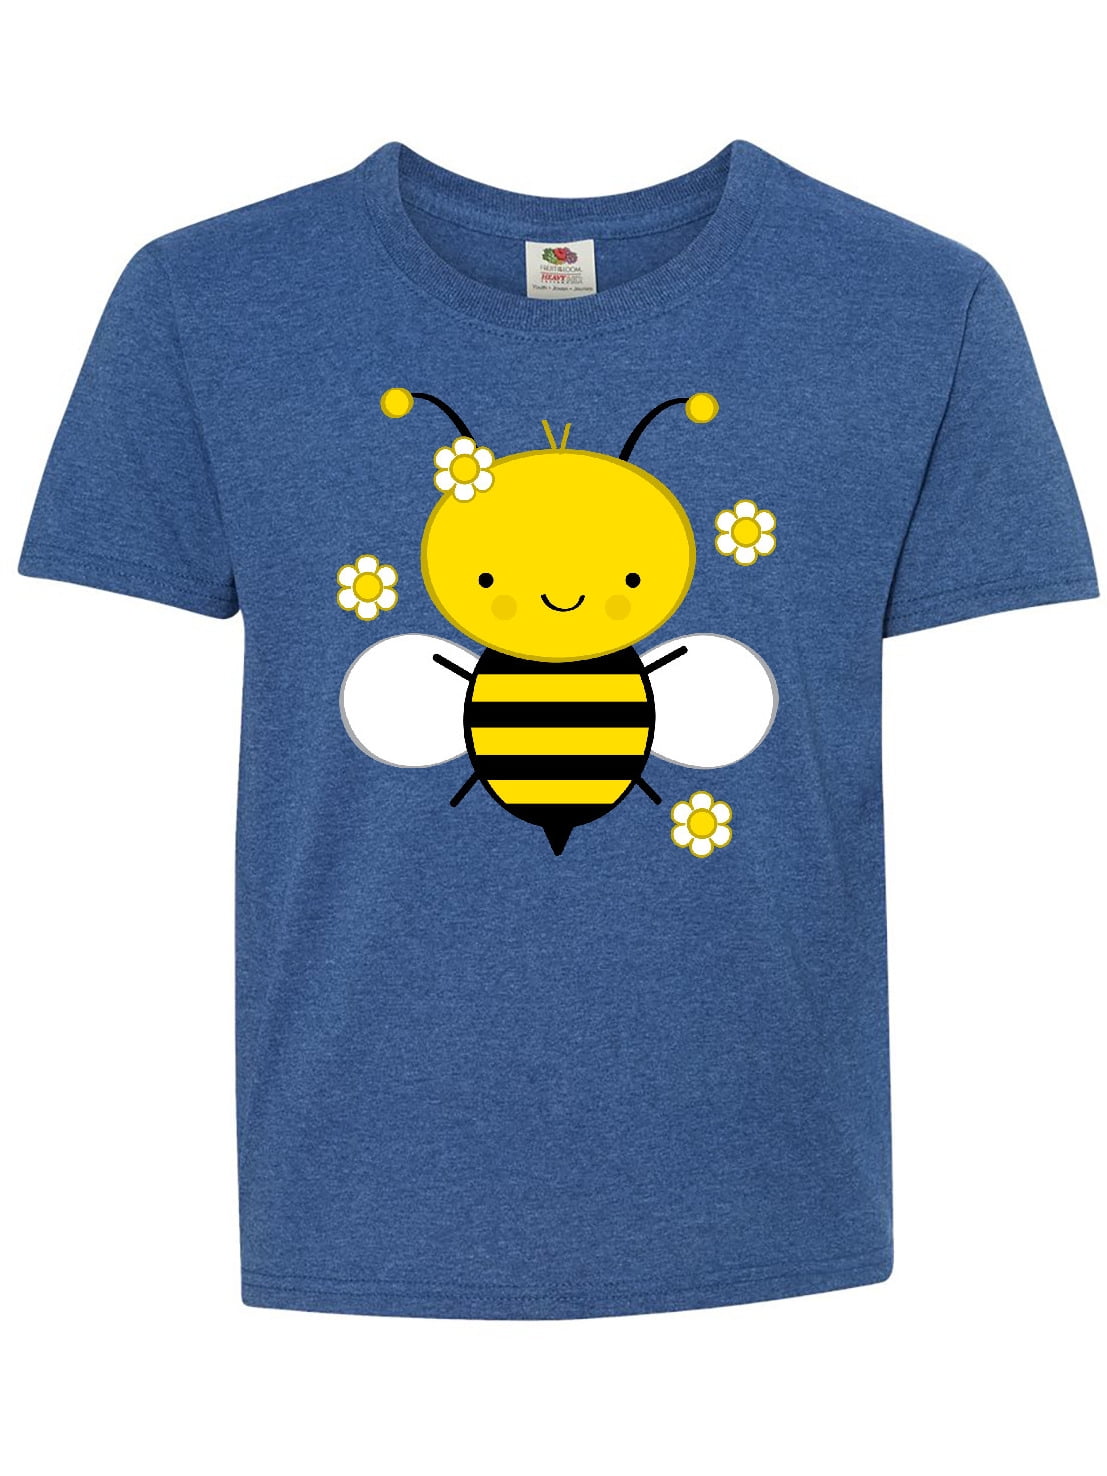 Honey Bee and Daisies Childs Youth T-Shirt - Walmart.com - Walmart.com